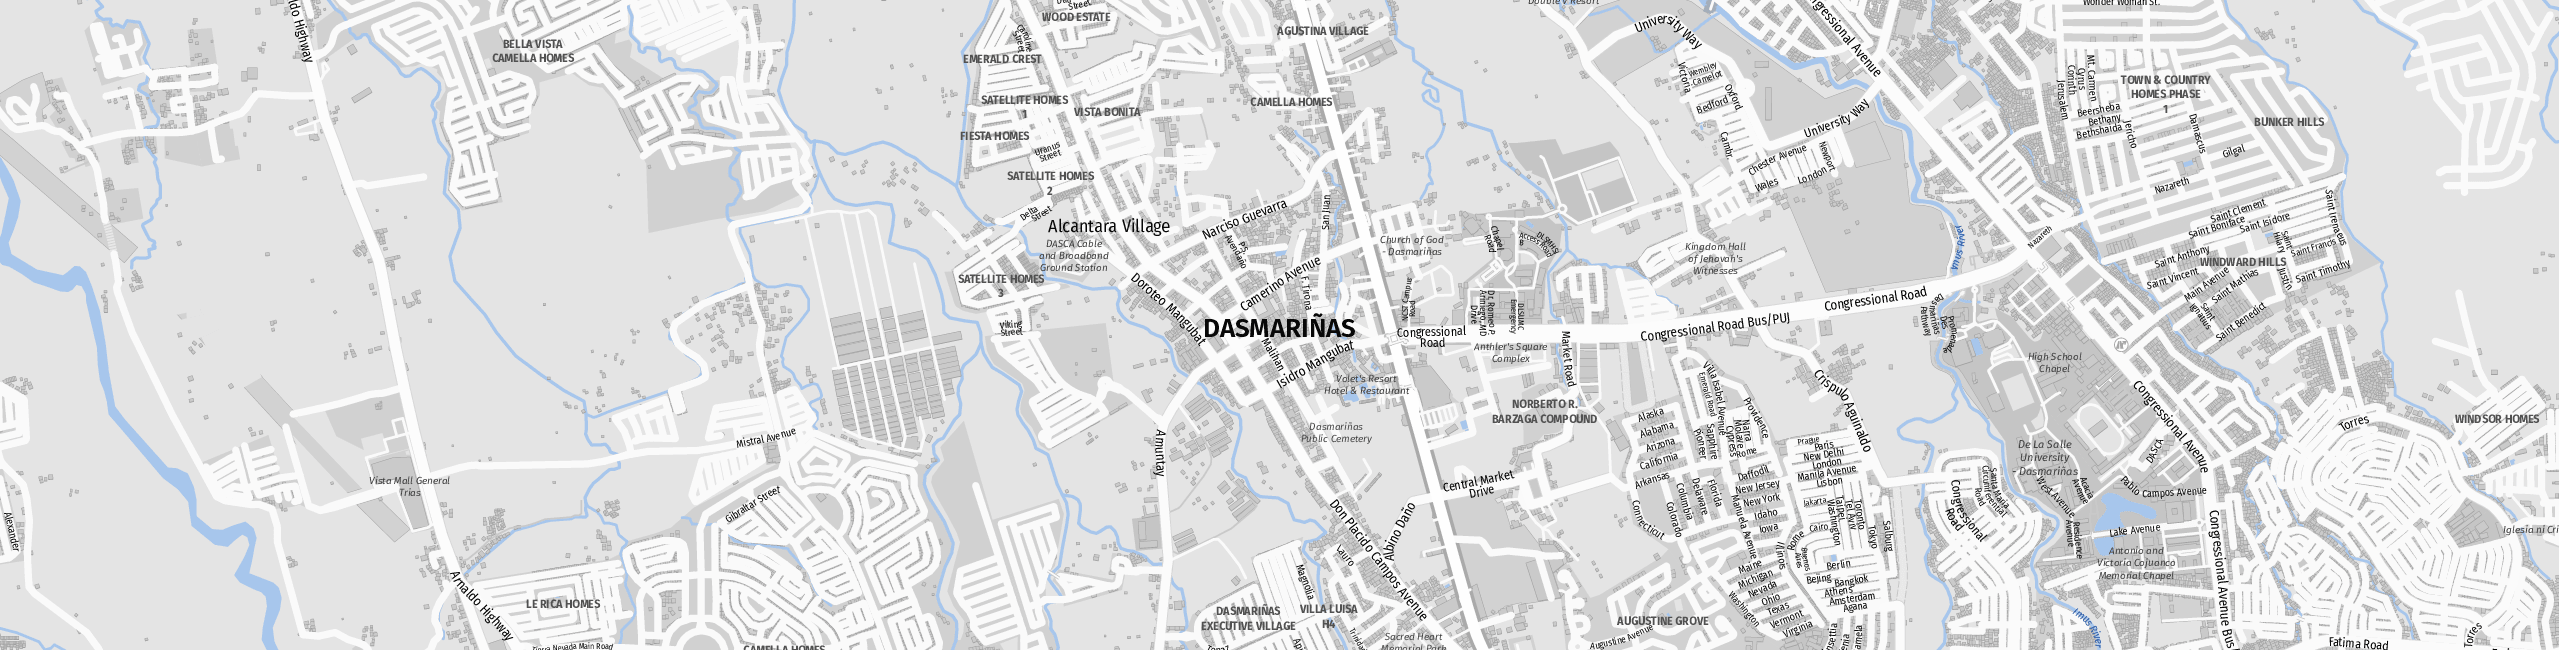 Stadtplan Dasmariñas zum Downloaden.